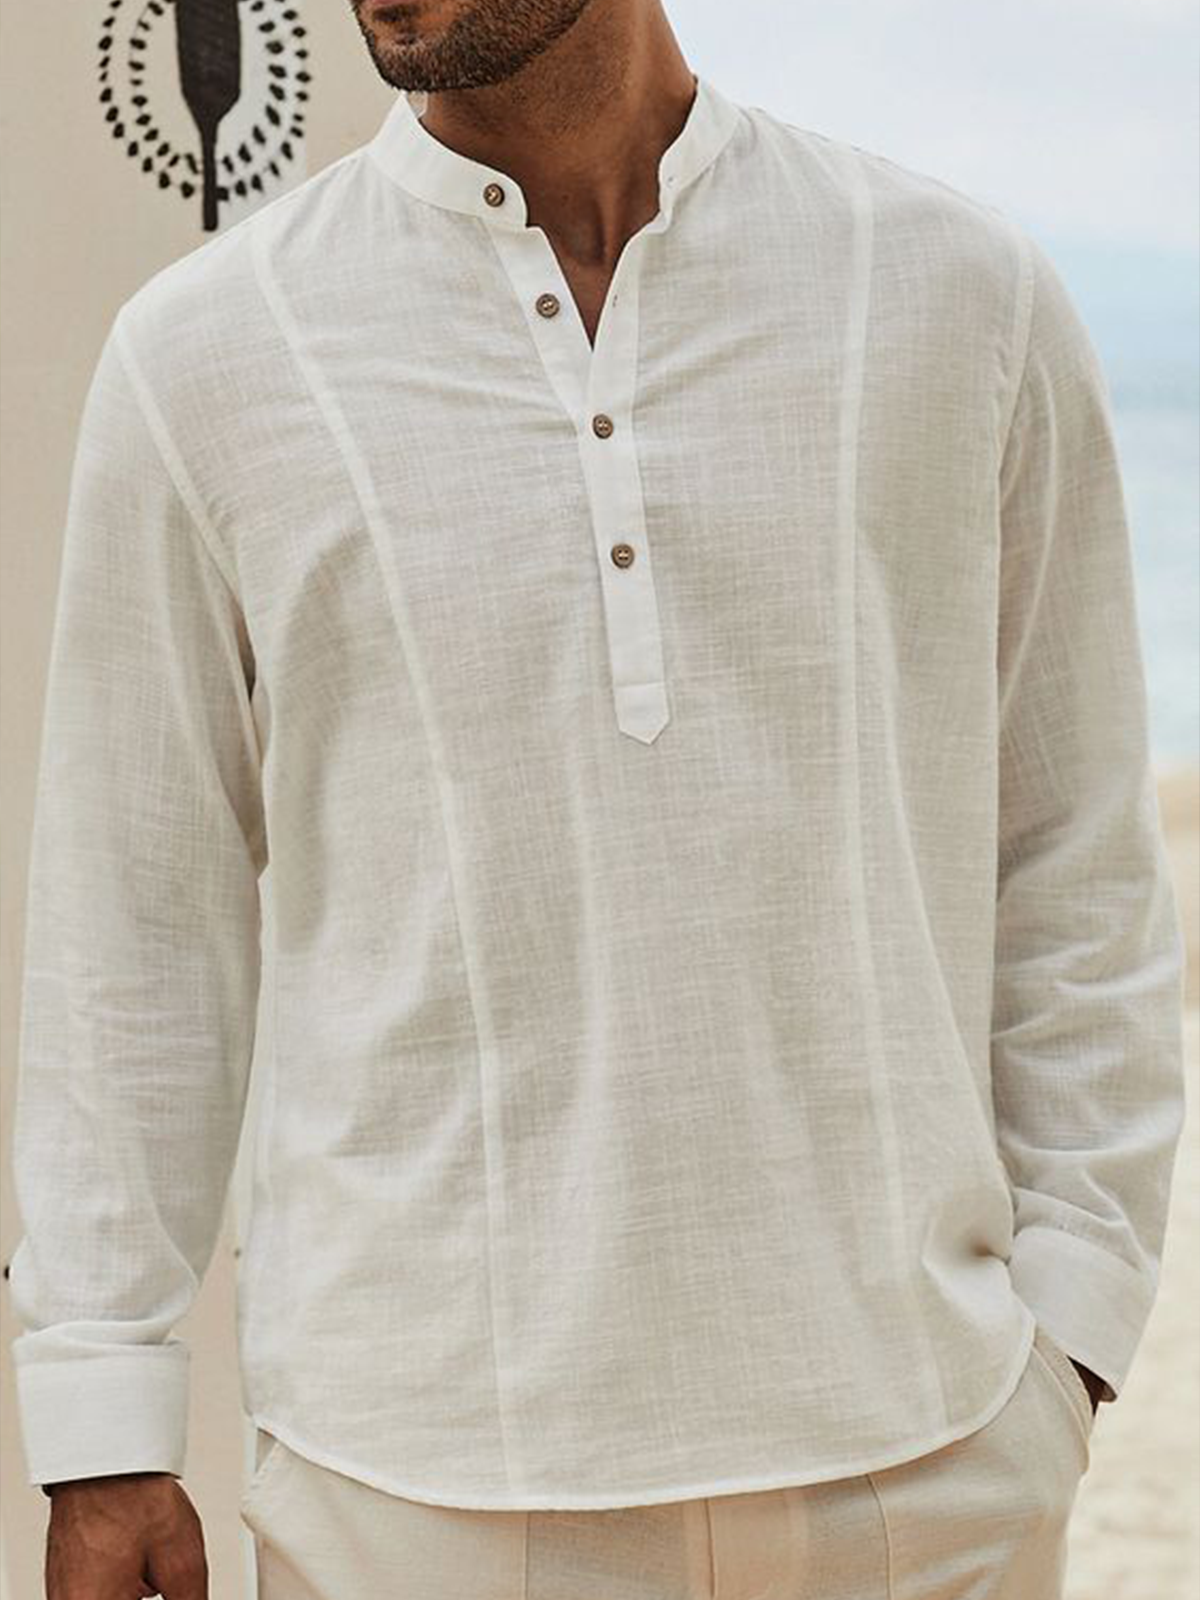 Hardaddy Plain Cotton Long Sleeve Casual Shirt